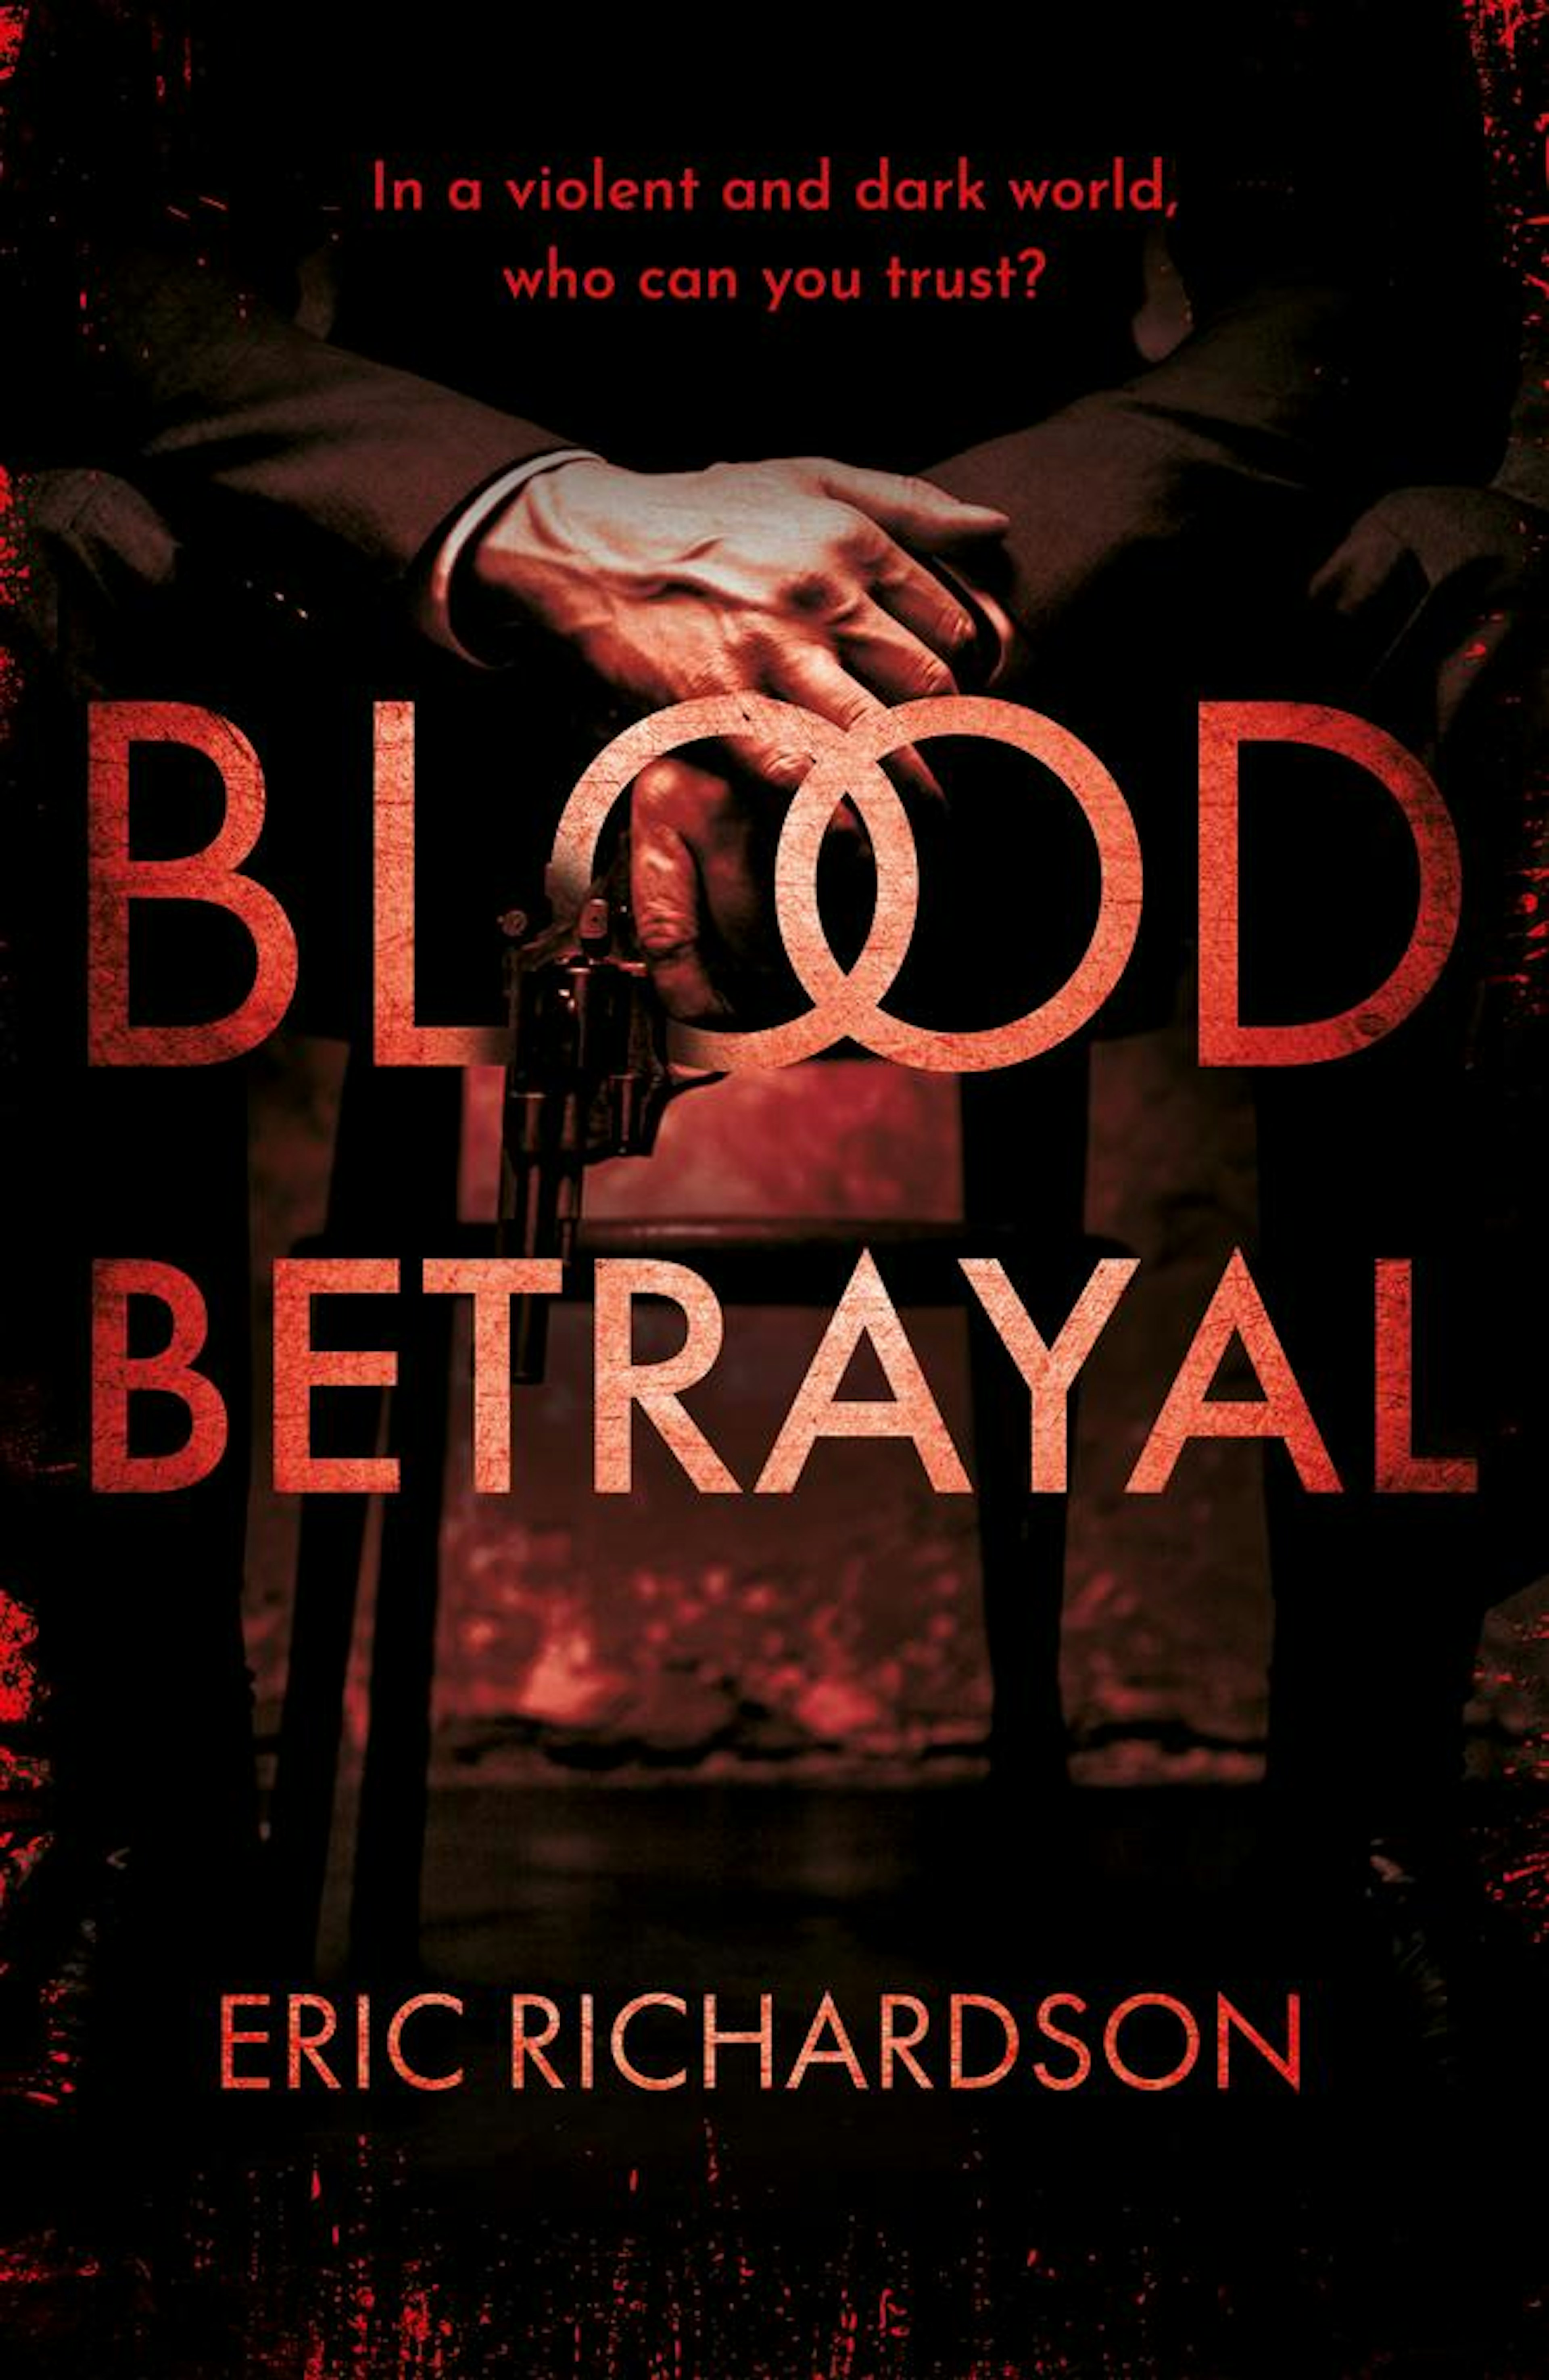 Blood Betrayal